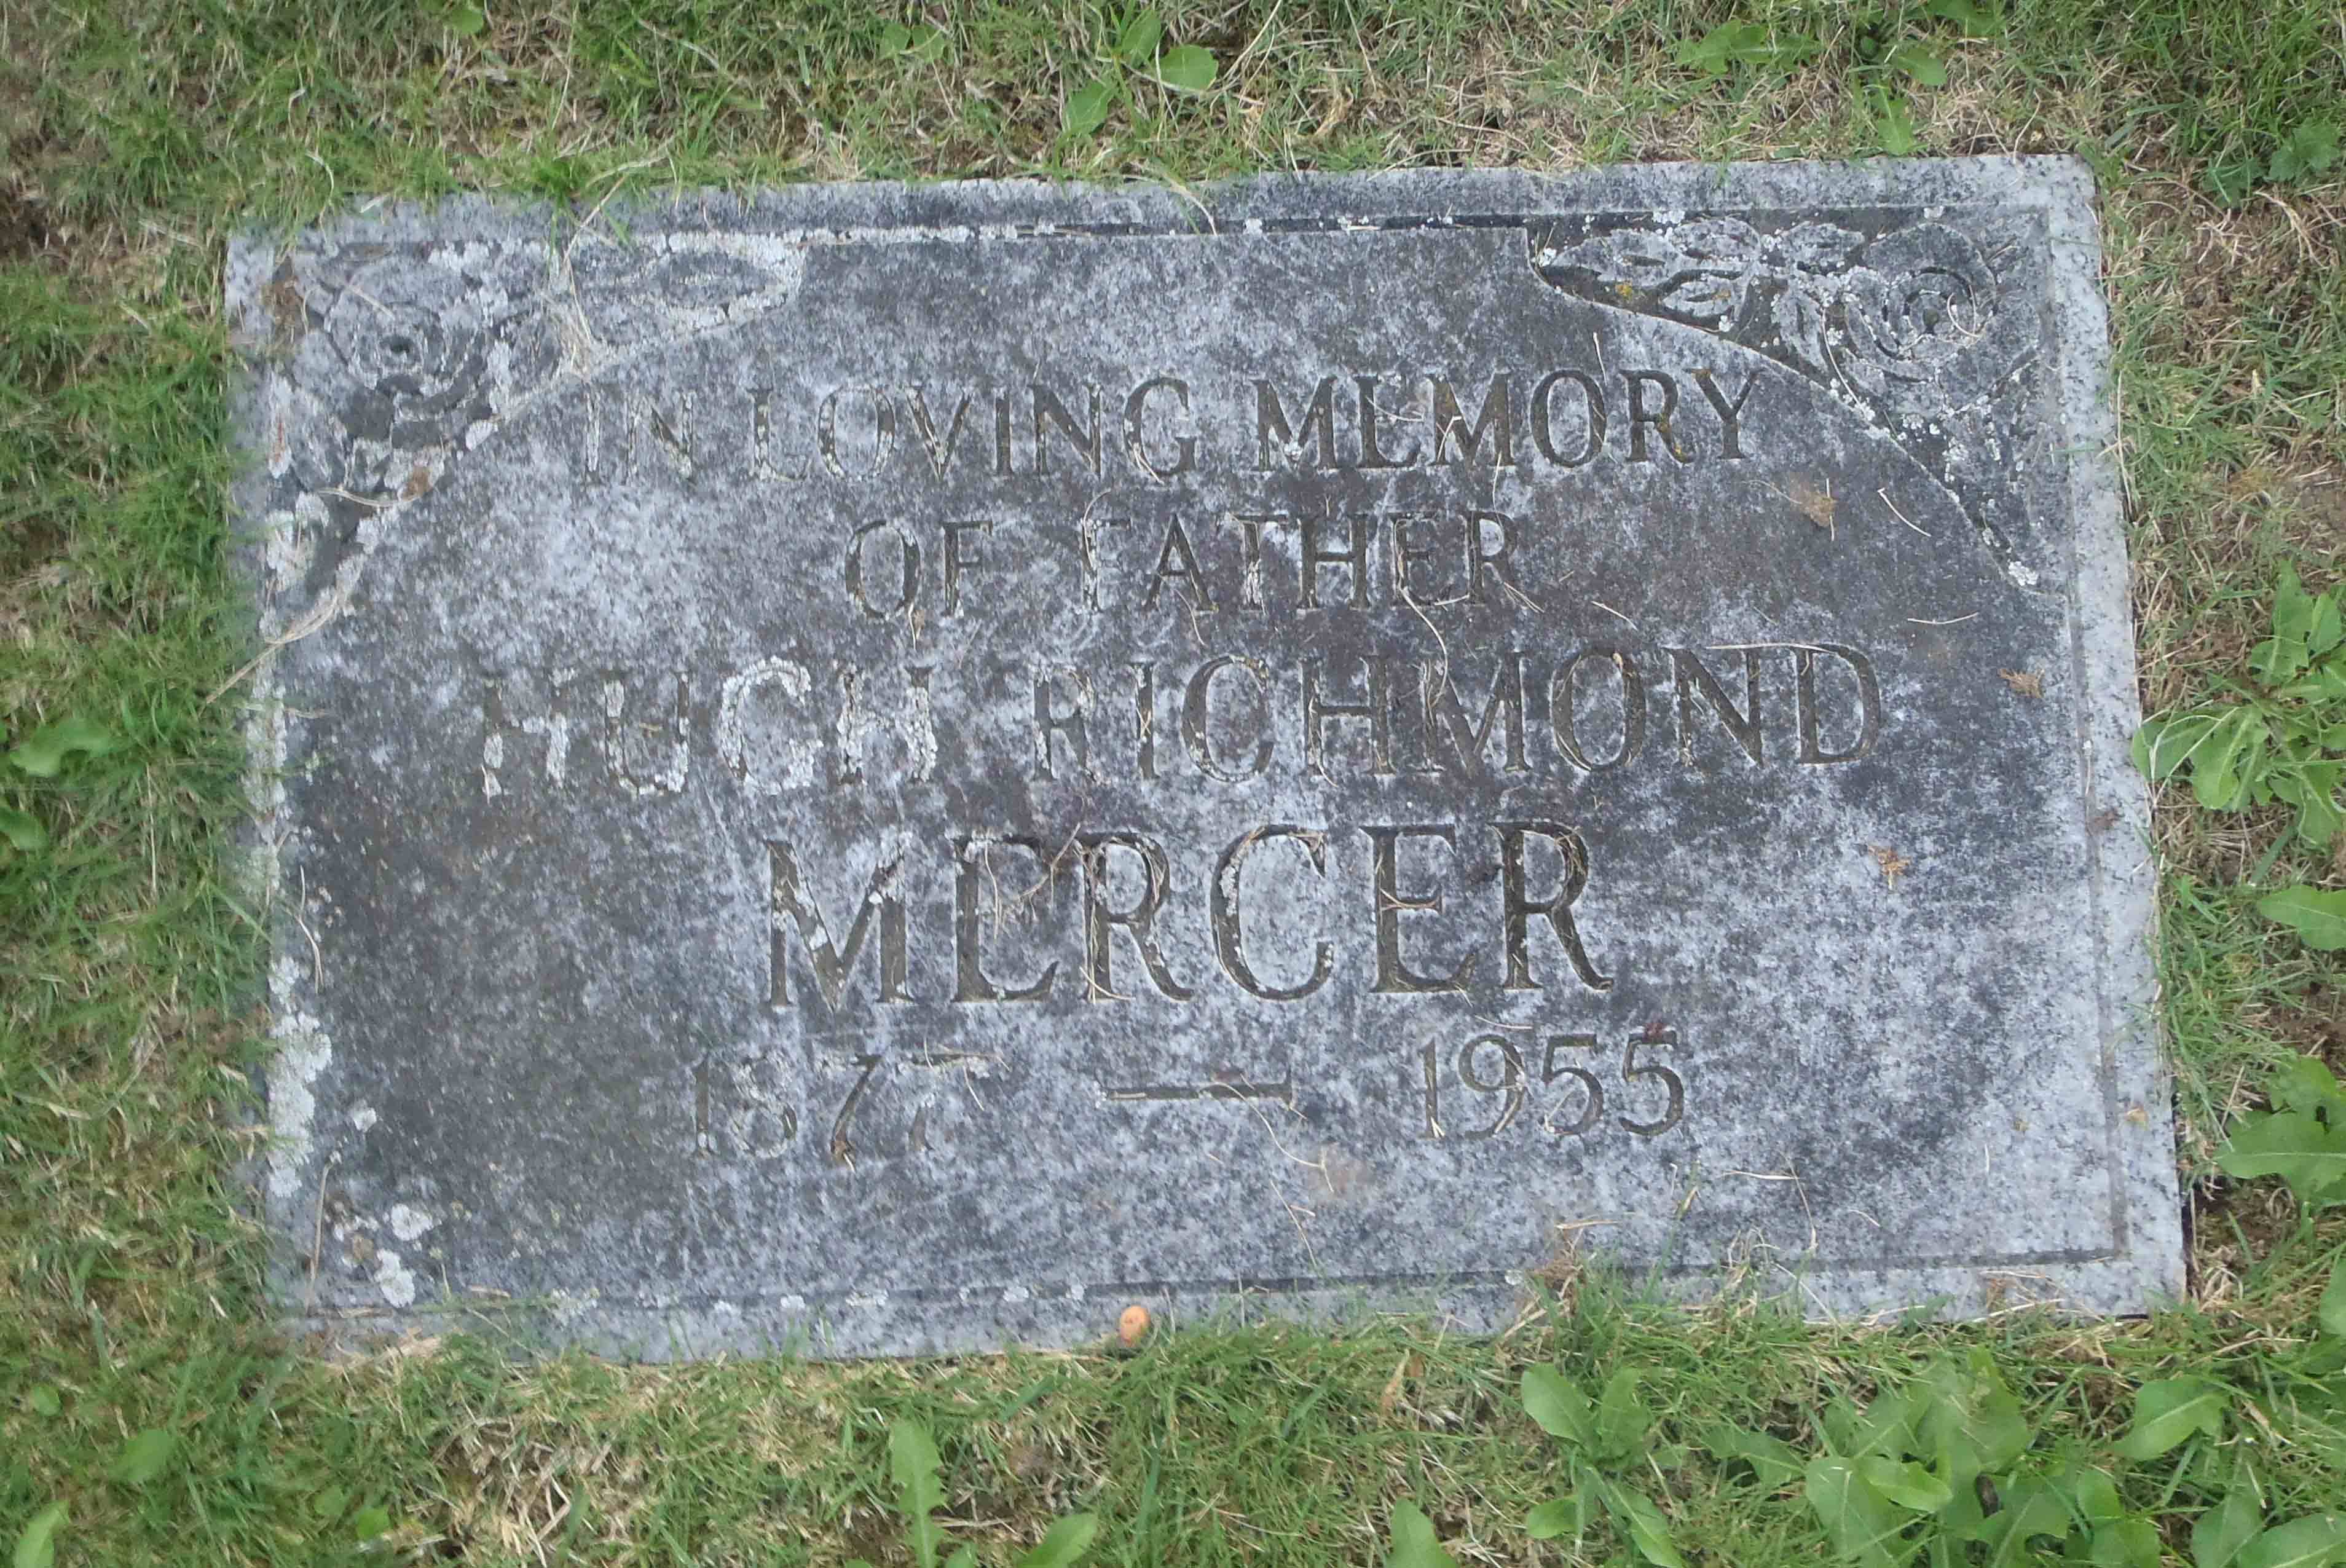 Hugh Richmond Mercer grave, Ladysmith cemetery